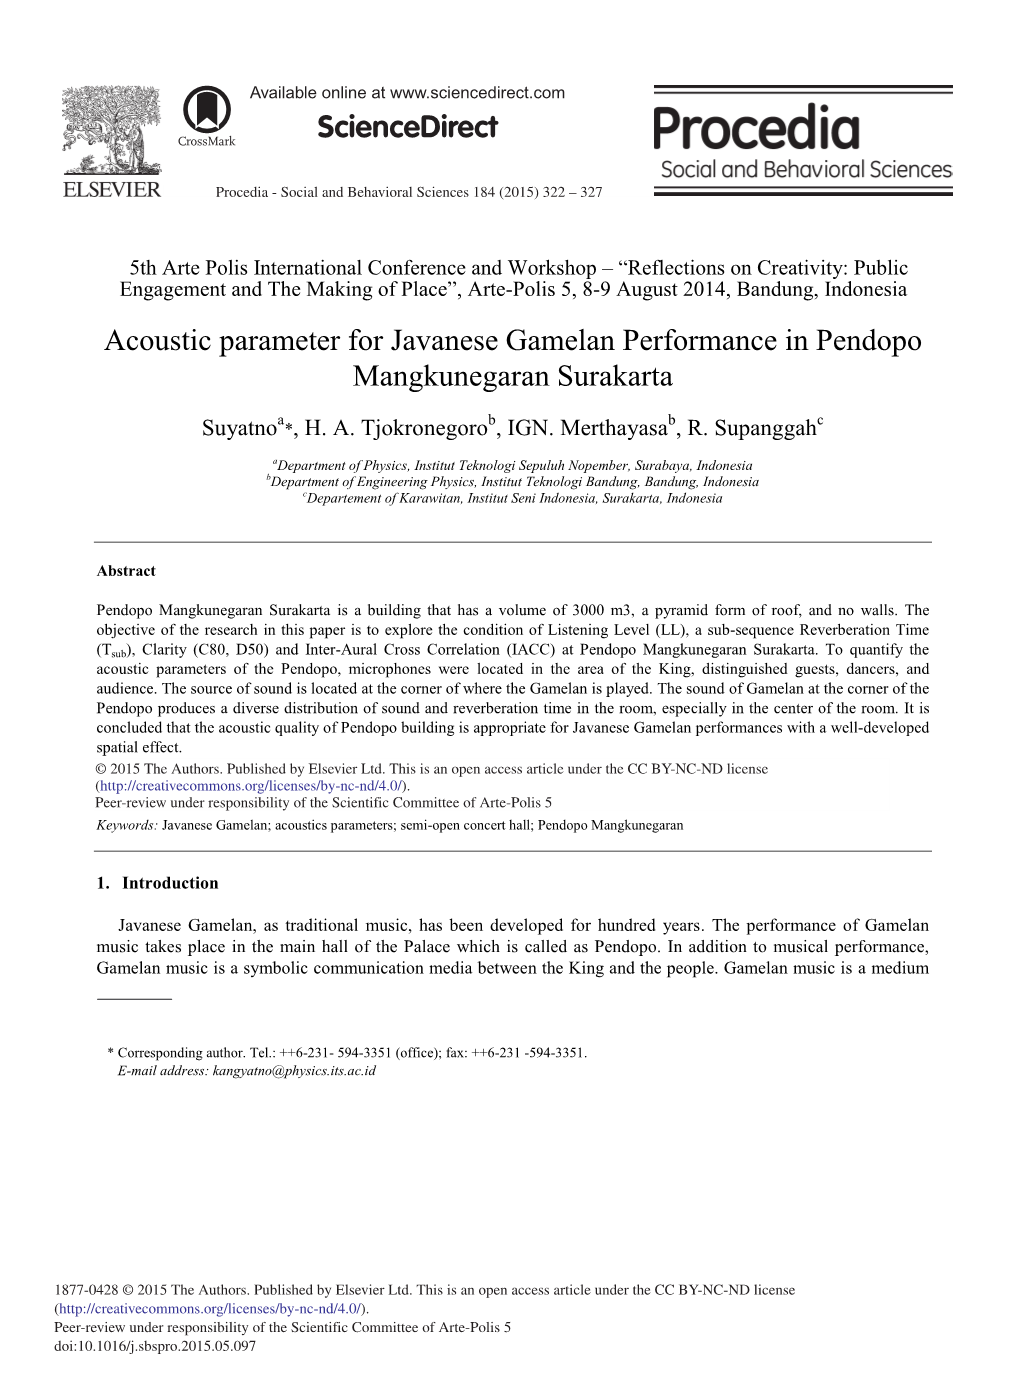 Acoustic Parameter for Javanese Gamelan Performance in Pendopo Mangkunegaran Surakarta